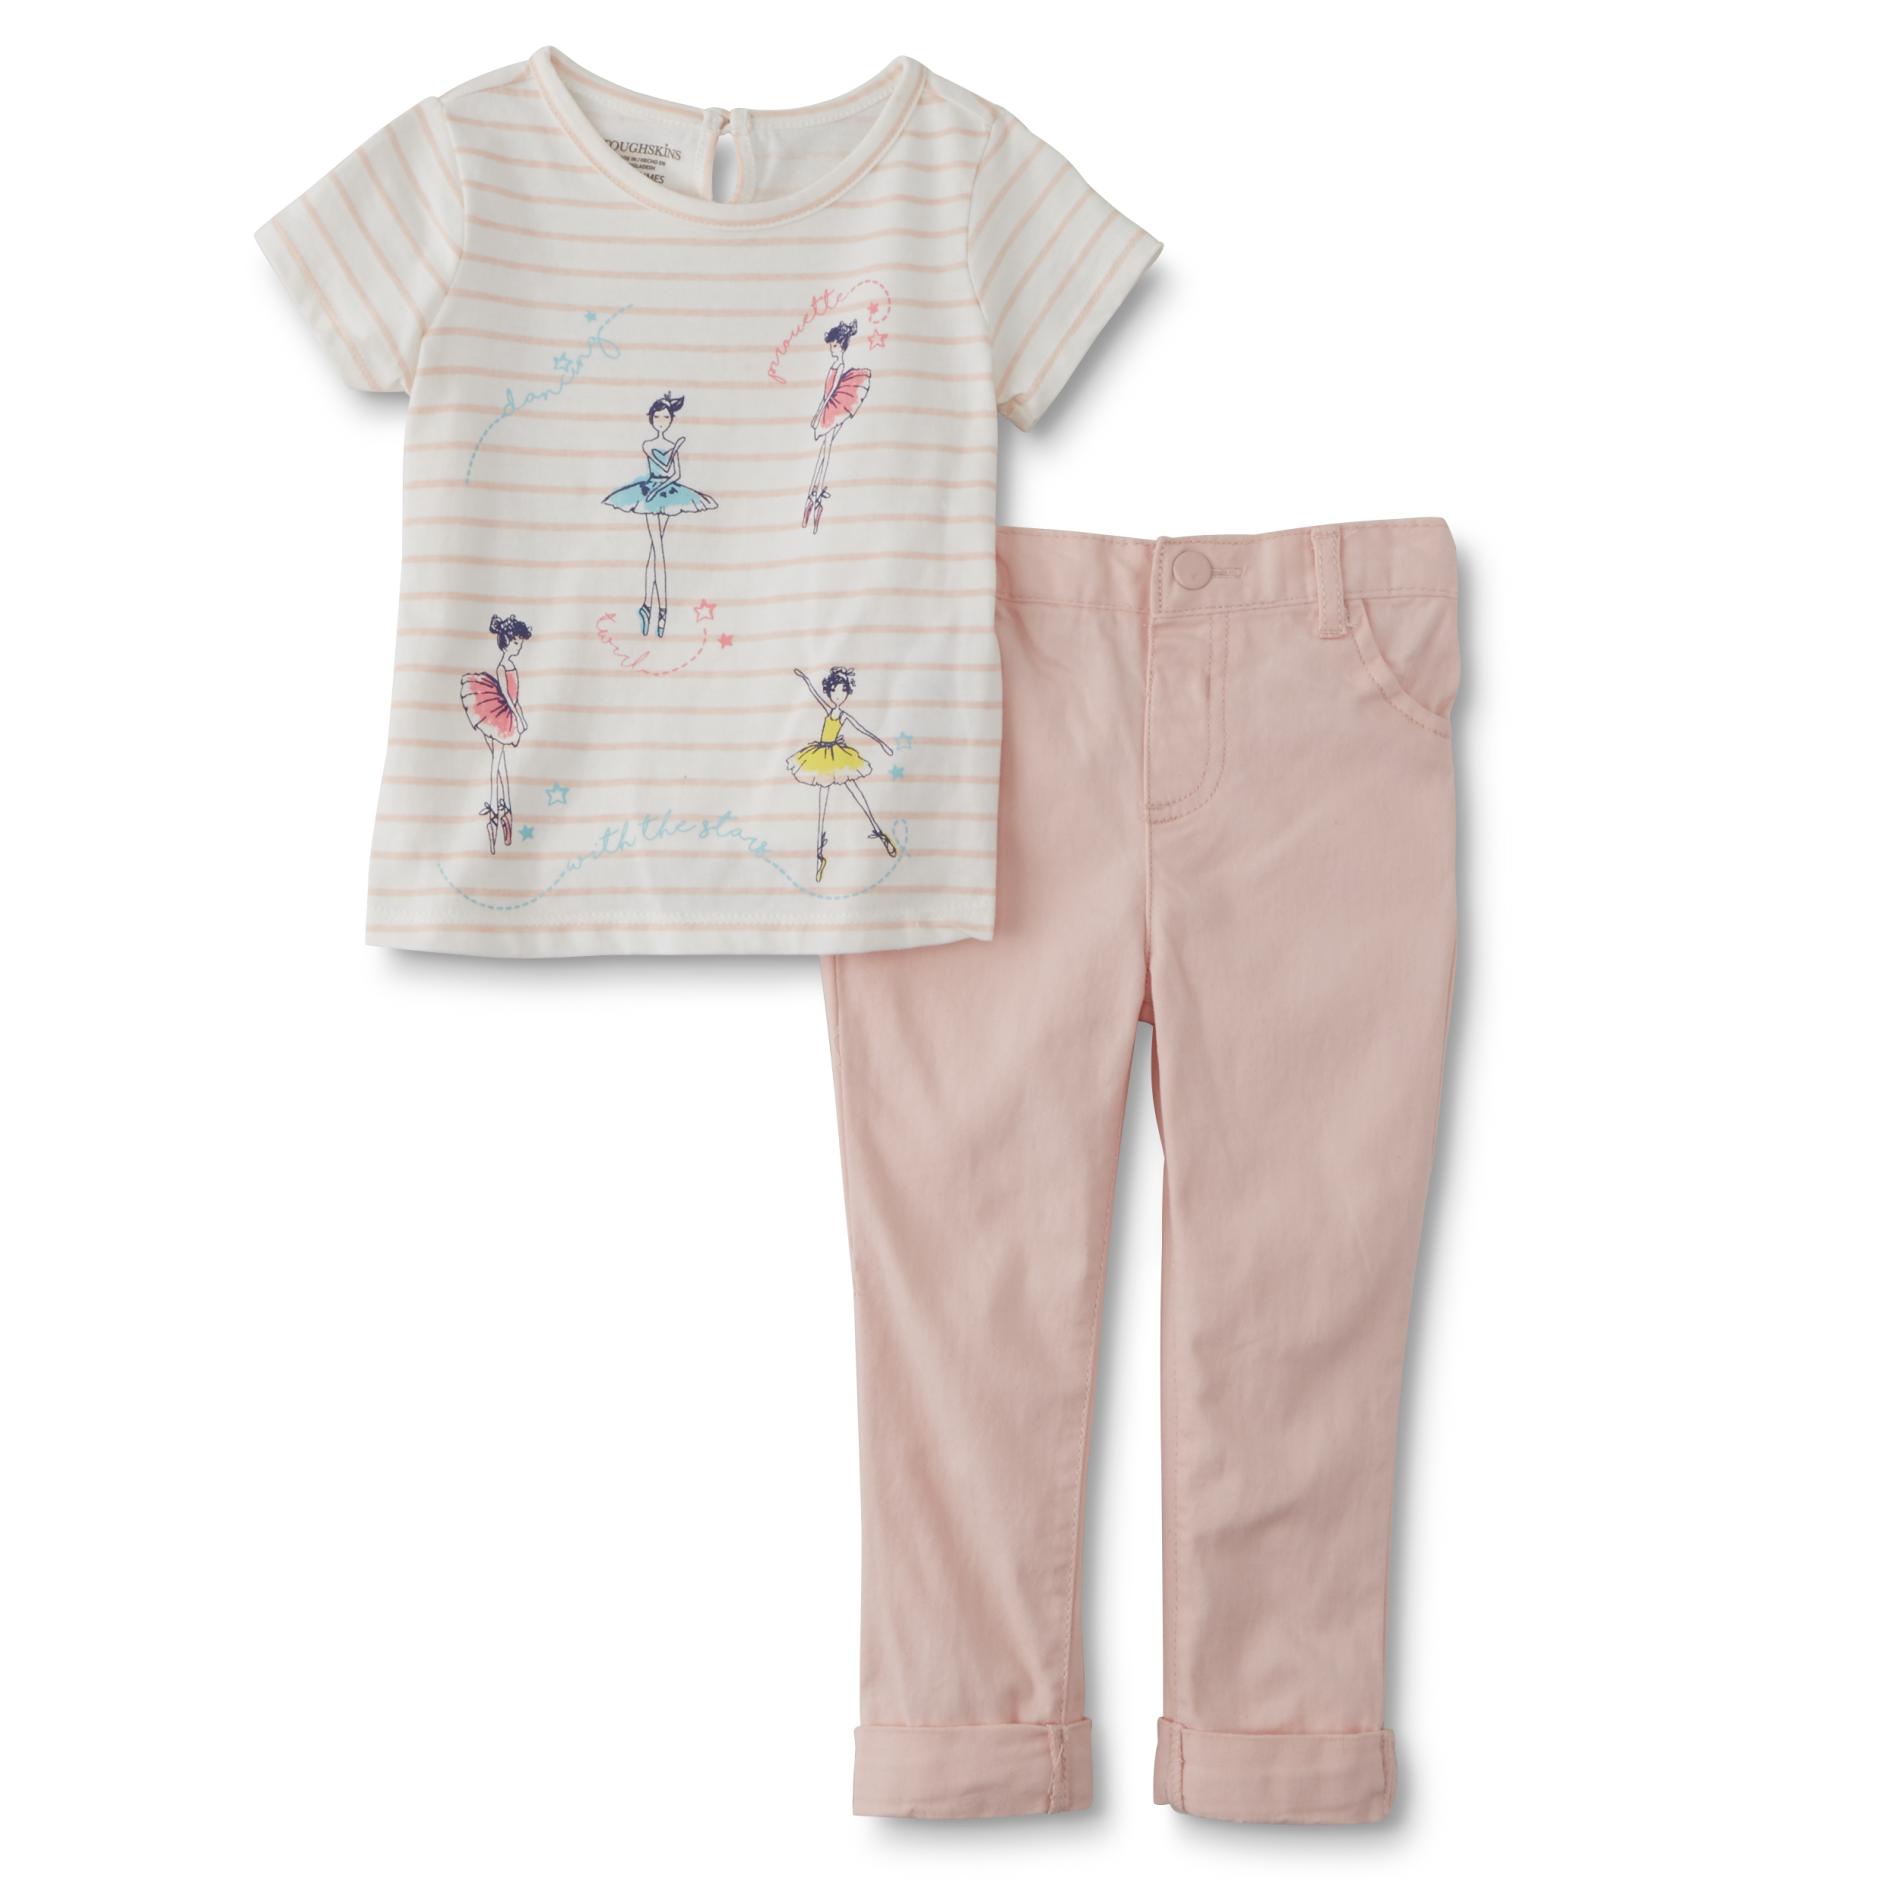 Toughskins Infant & Toddler Girls' Graphic T-Shirt & Pants - Ballerinas